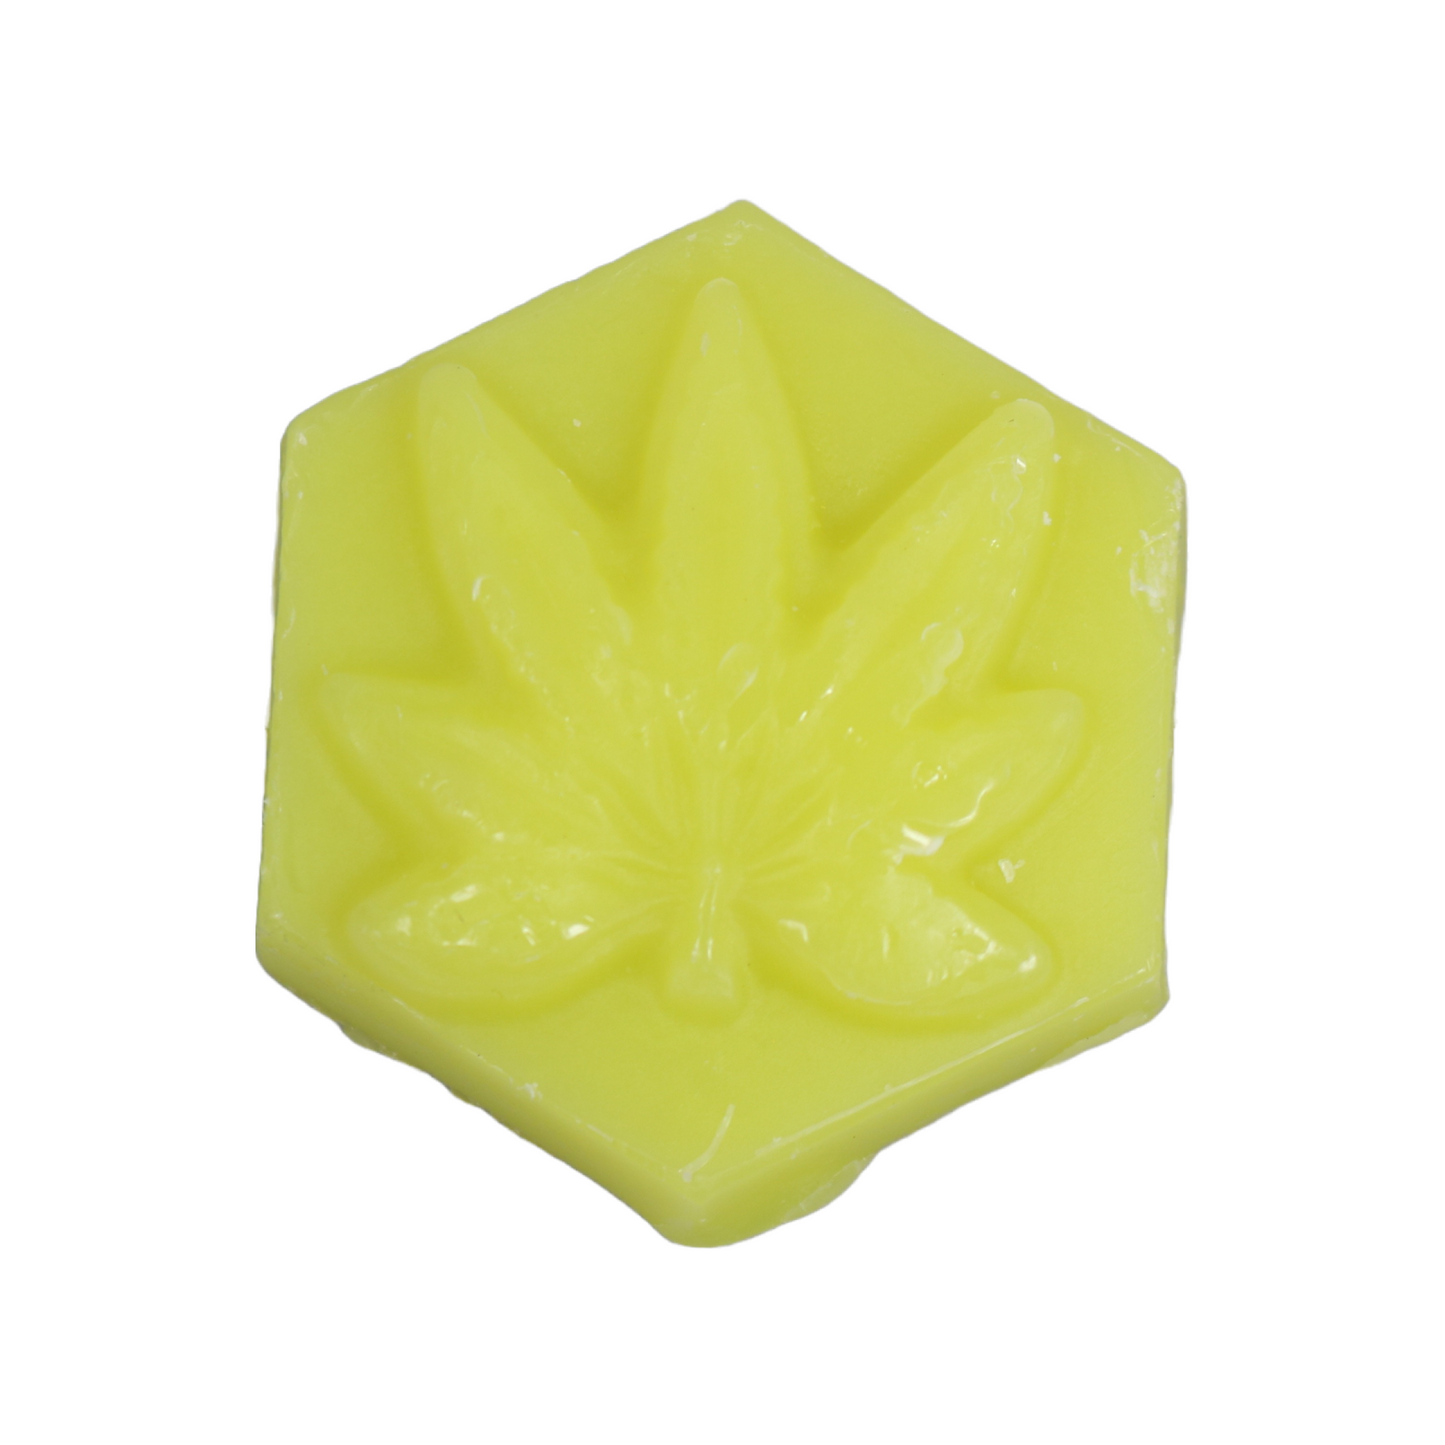 Ganj Wax - Small (Pineapple Scent)